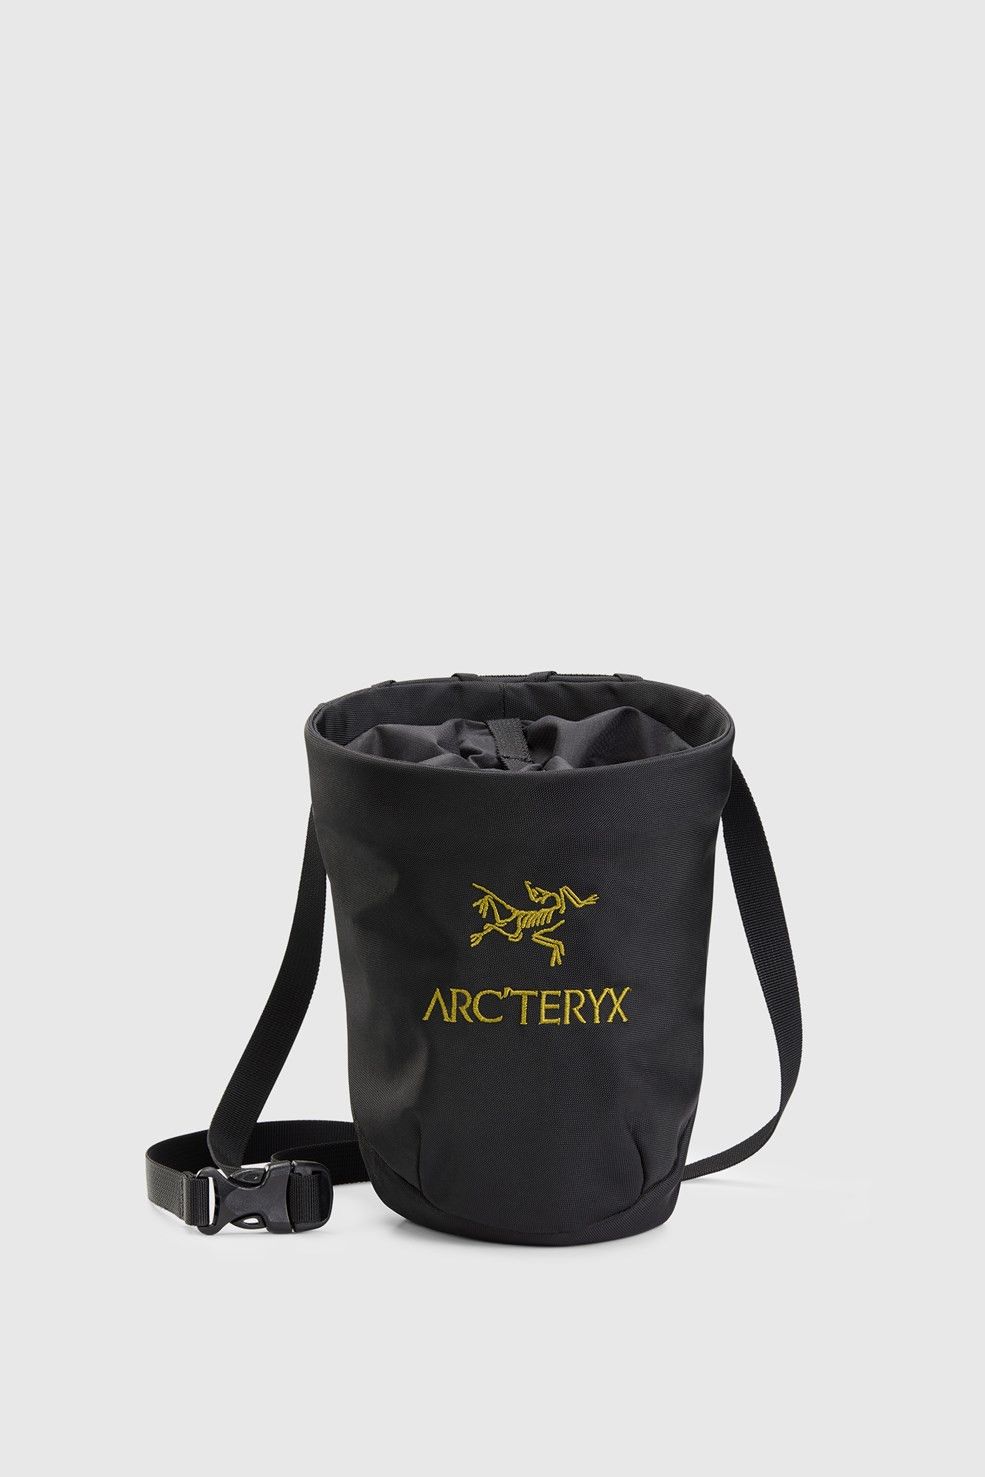 Arc'Teryx Arc'Teryx System A Quiver bag | Grailed